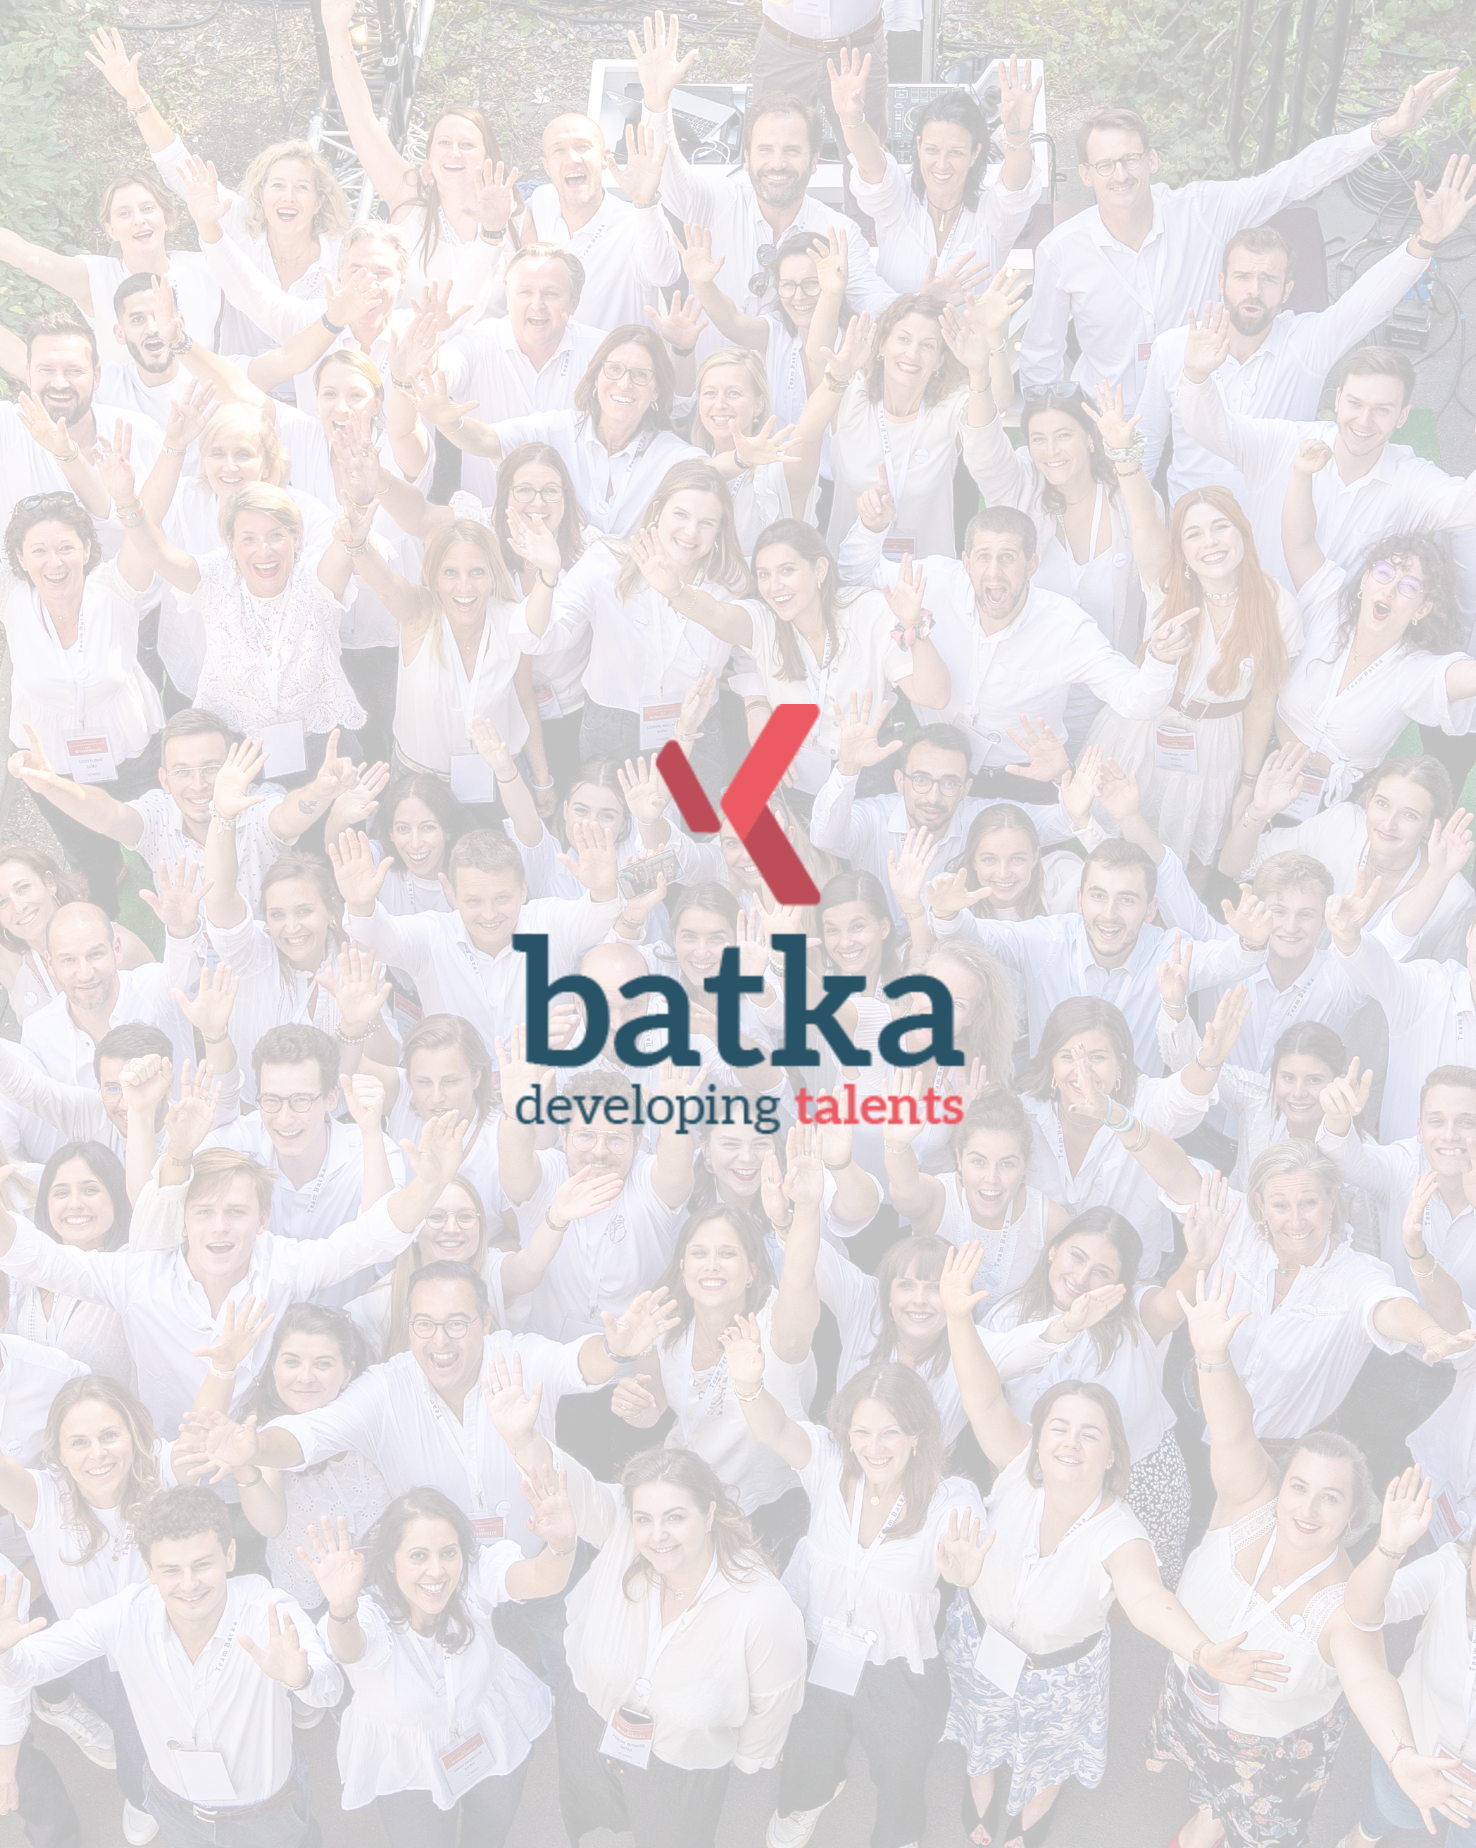 Logo Batka developing talents avec équipe en filigrane